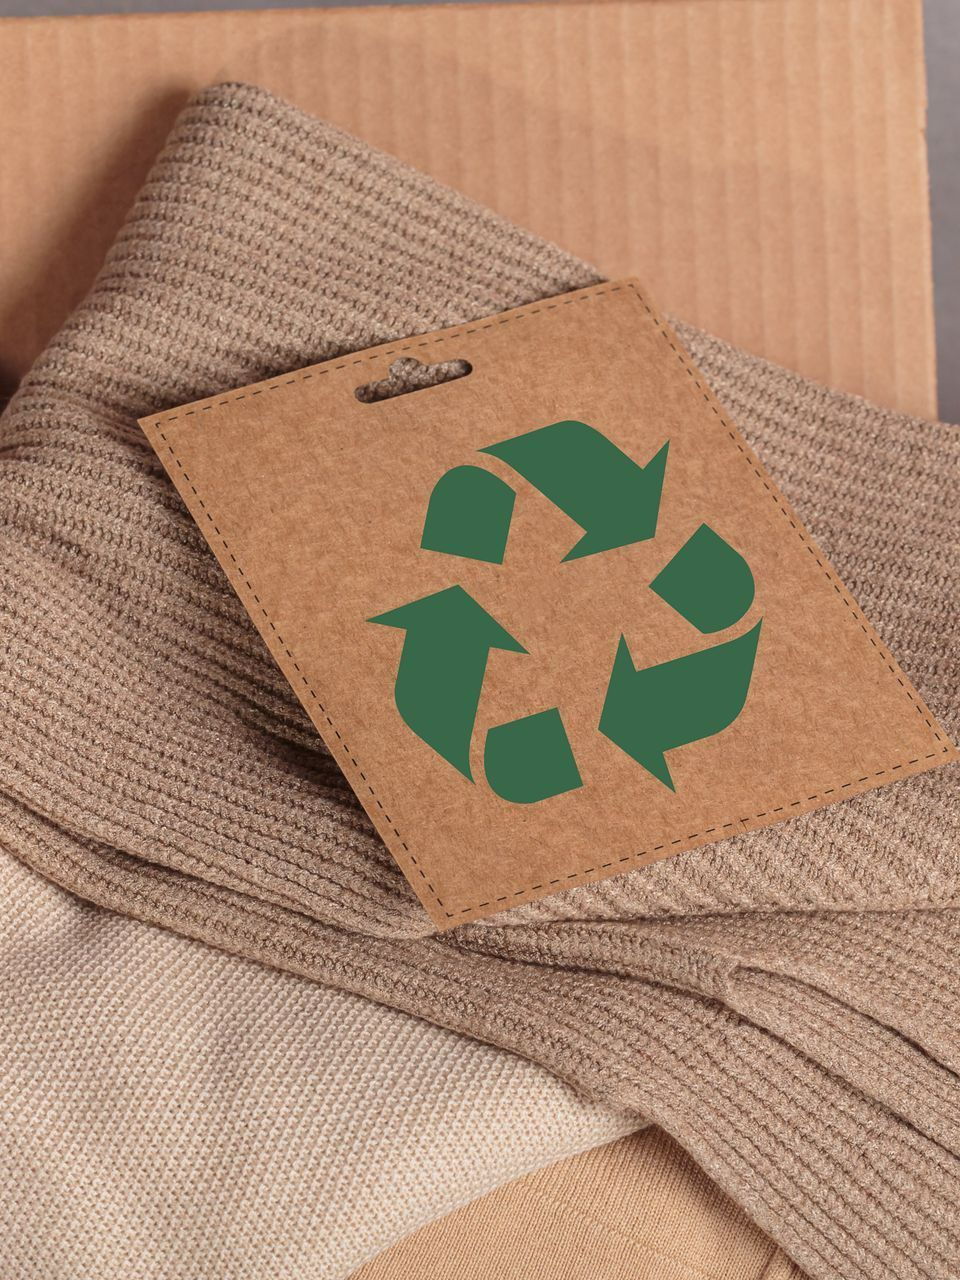 Carton avec logo recyclage